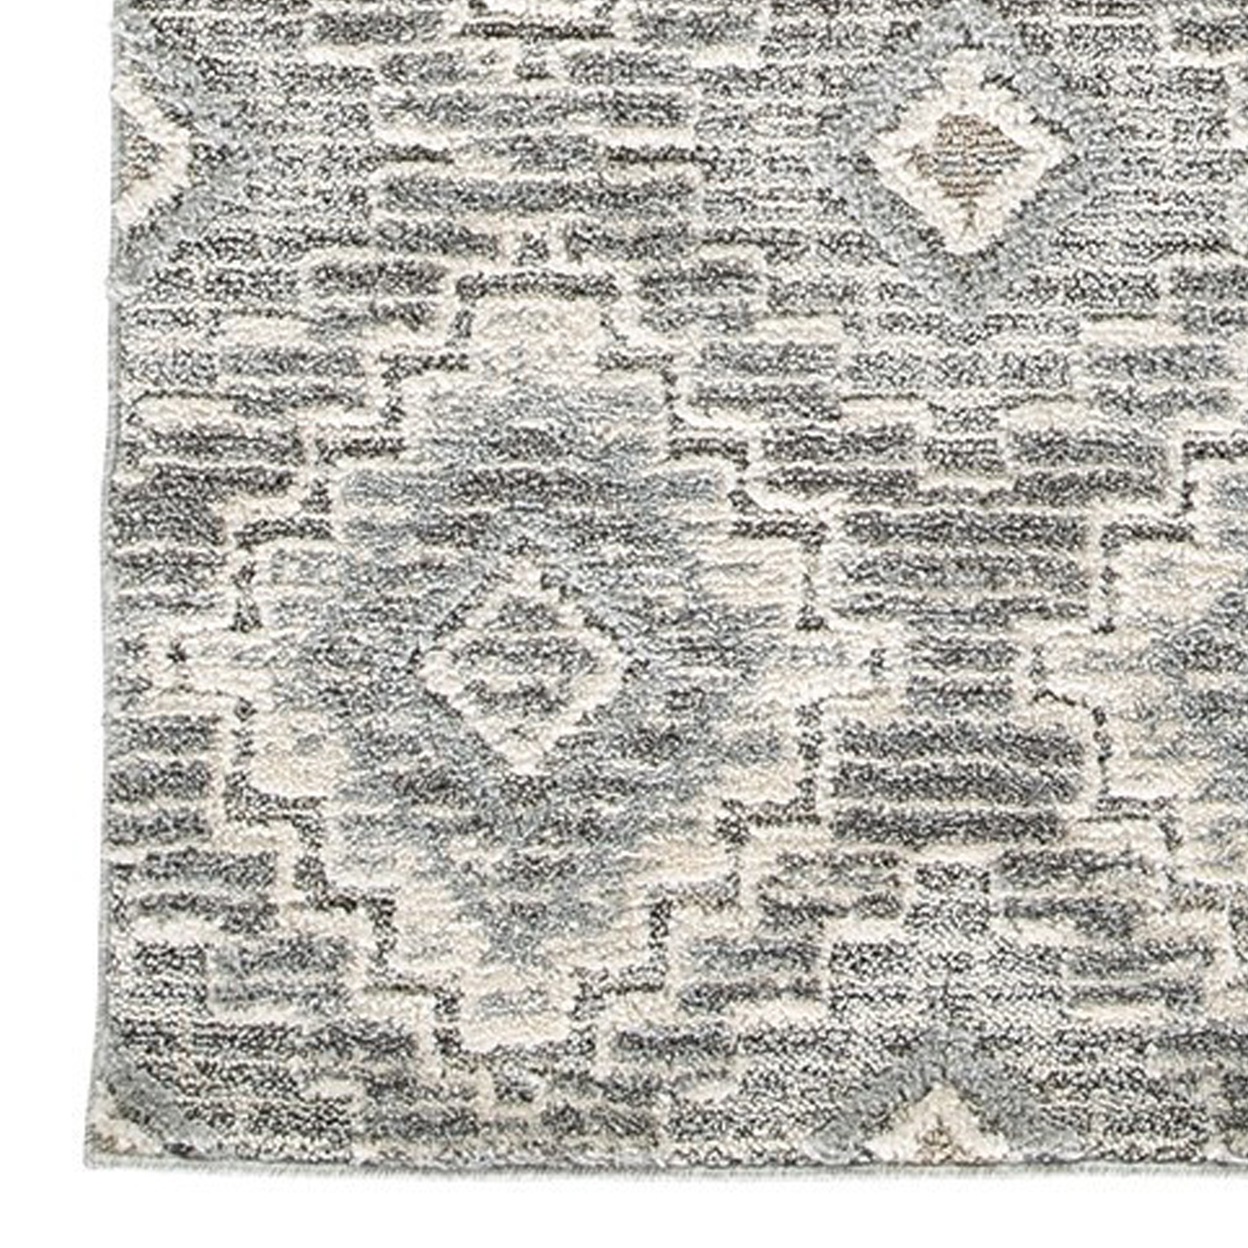 Ari 5 X 7 Modern Area Rug, Diamond Pattern, Soft Fabric, Cream, Gray- Saltoro Sherpi